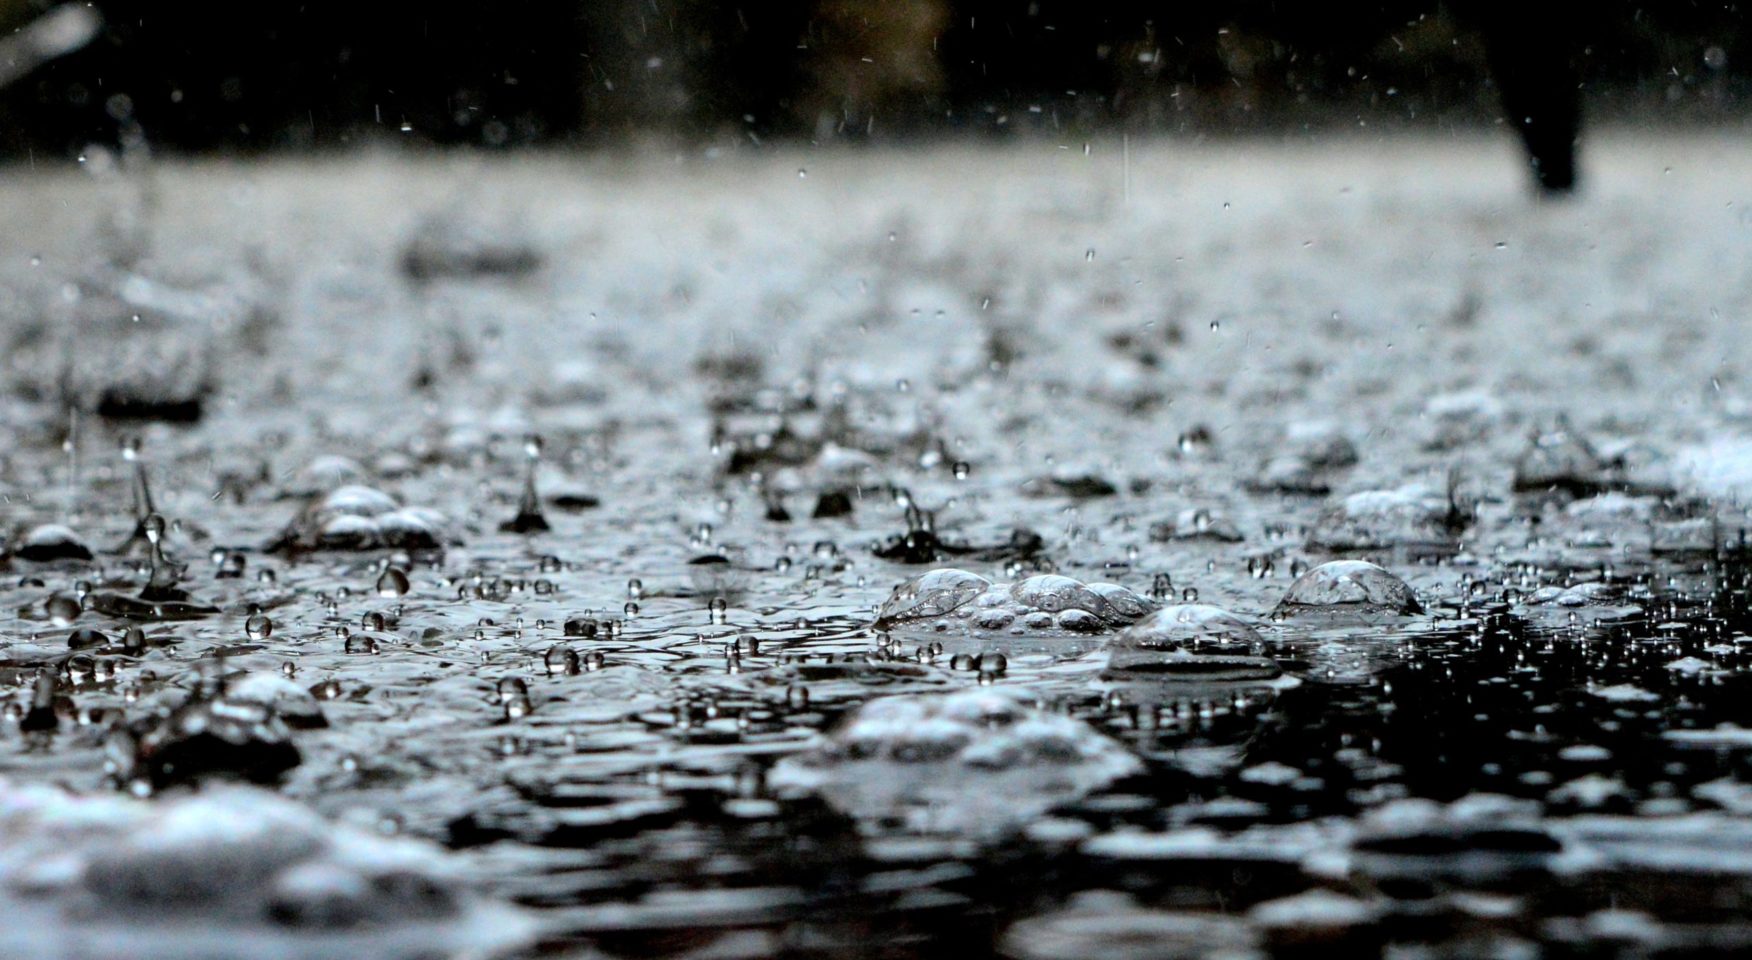 rain splashing on pavement